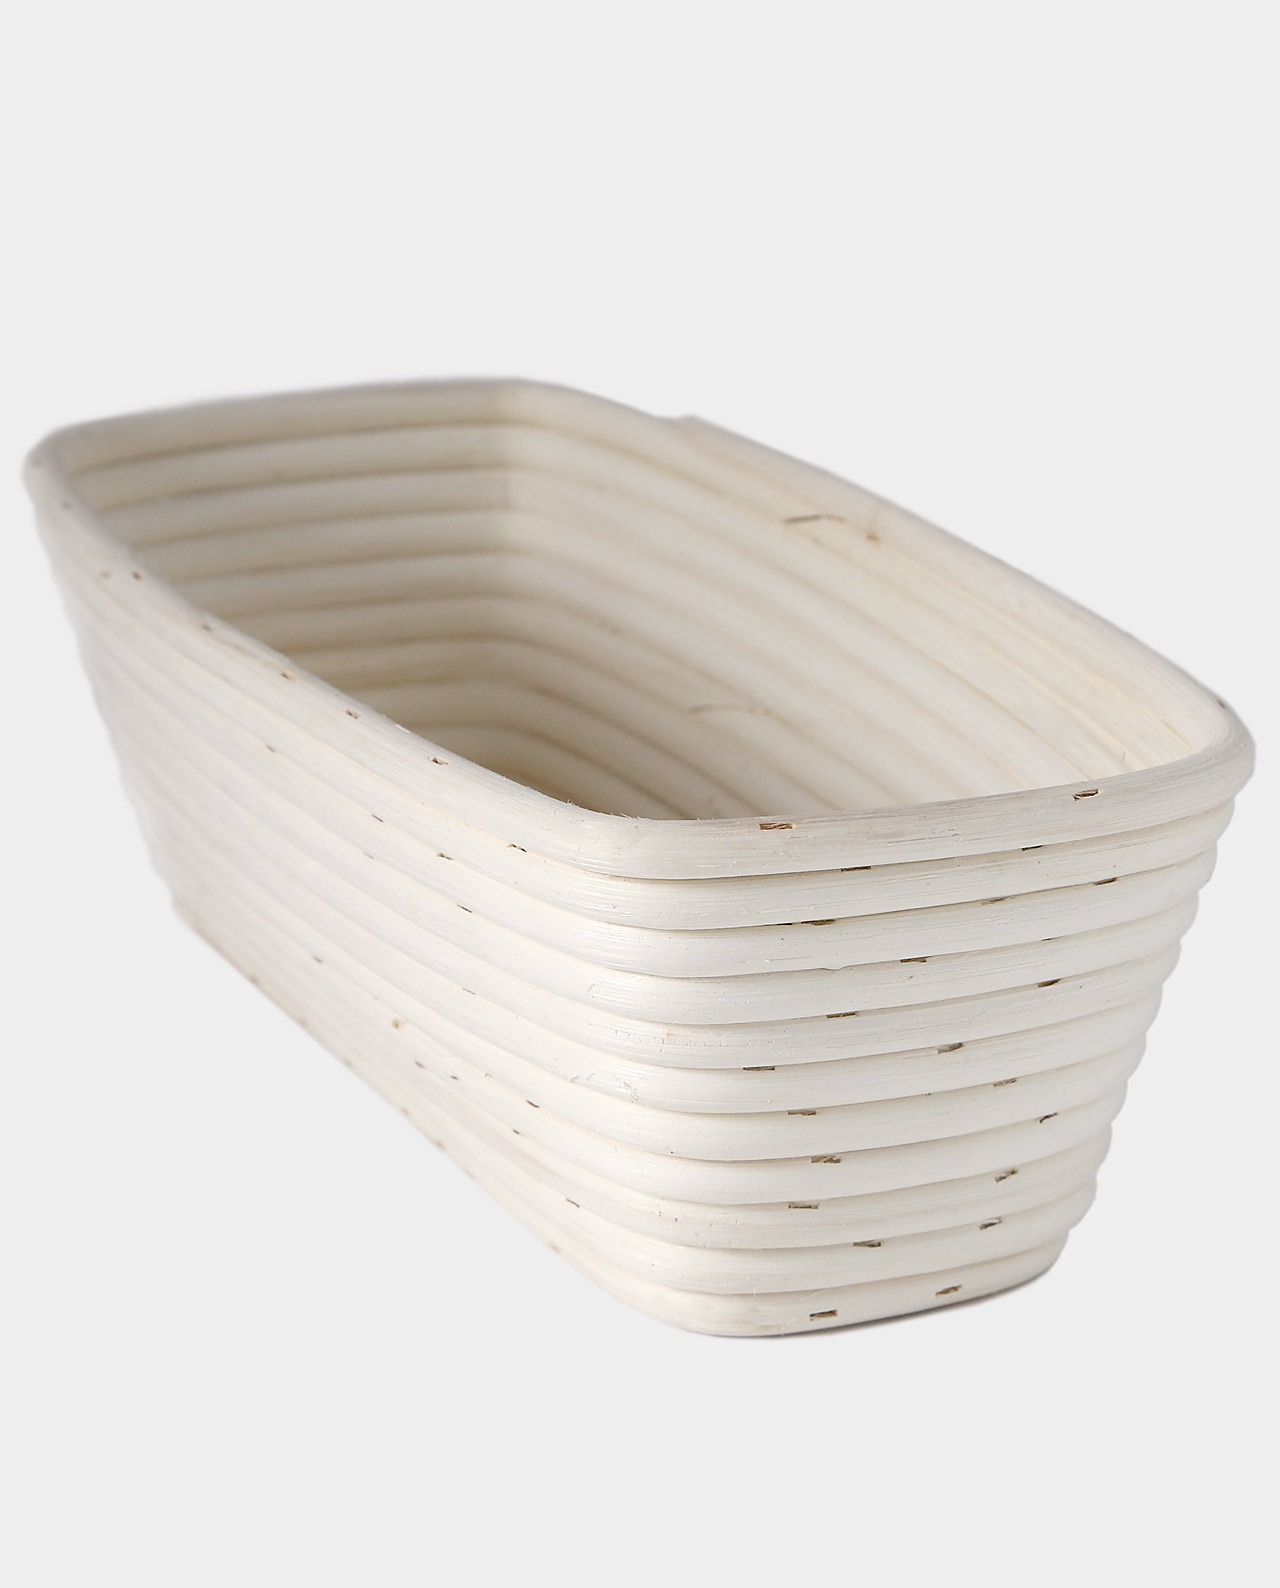 Proofing Rising Bowl in rattan 15 * 8 * 5cm Acogedor Oval Banneton Brotform for Bread Sour Pasta e proofing e pane artigianale 4 dimensioni Banneton Proofing Basket 